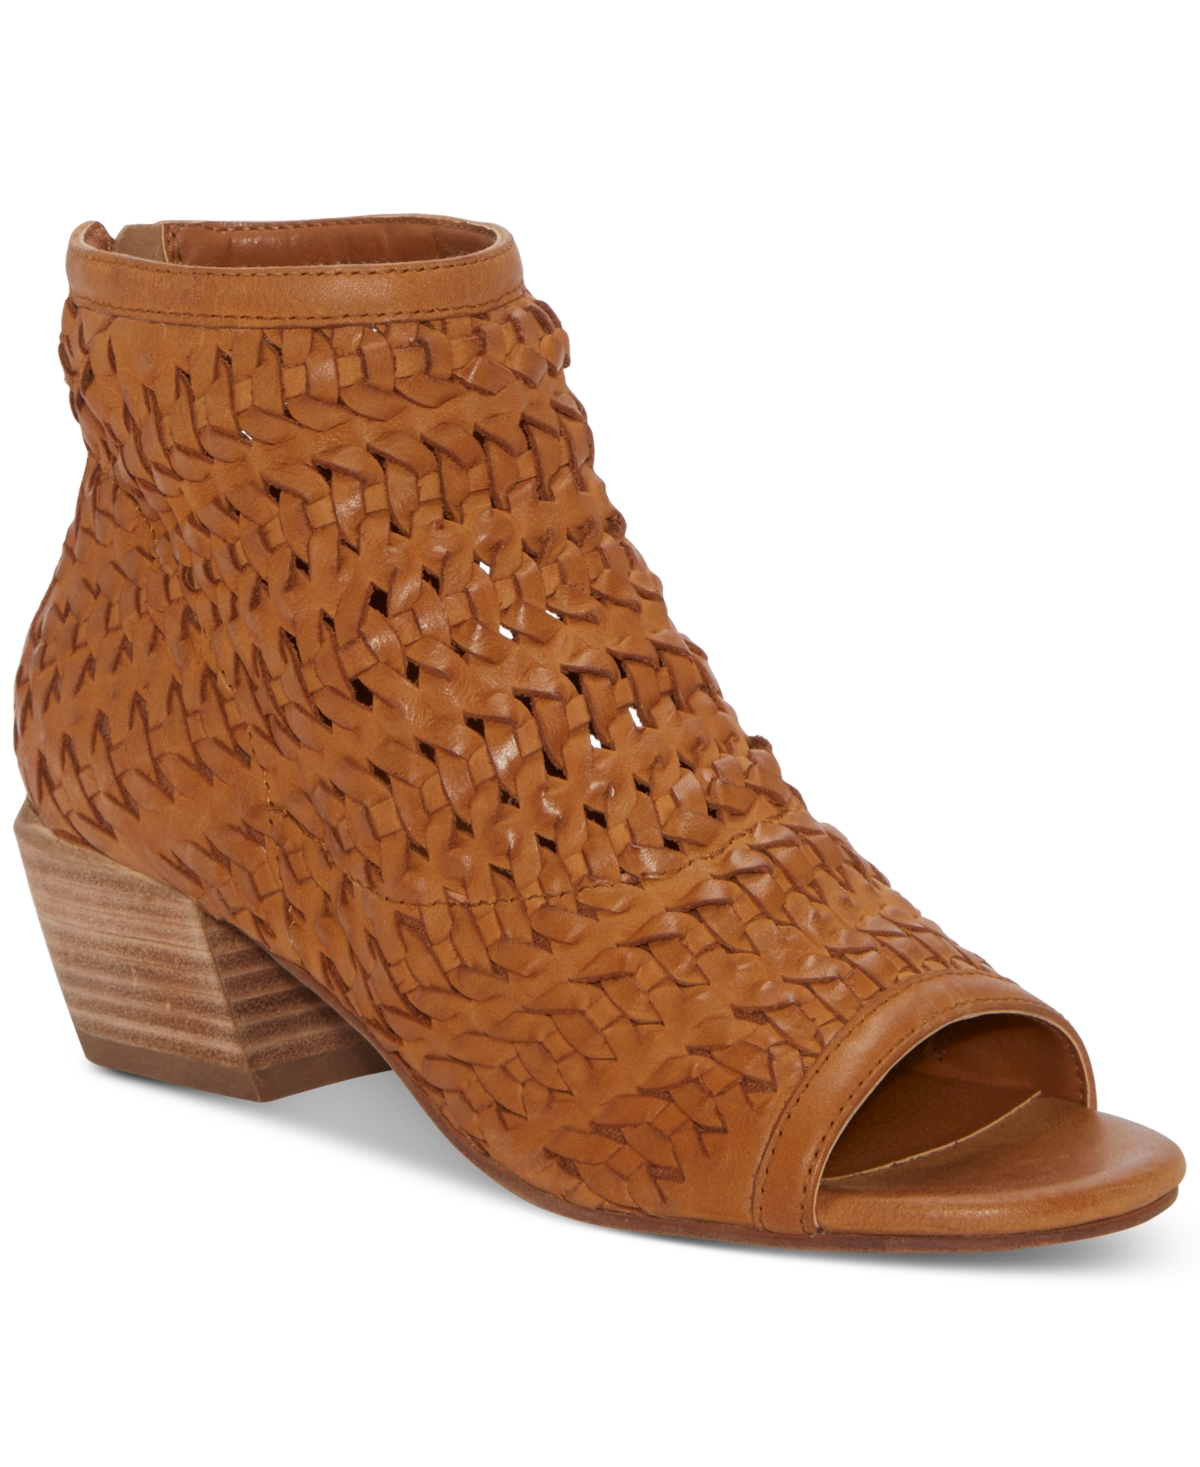 Women's Mofira Woven Peep Toe Heeled Sandals - Tan Leather